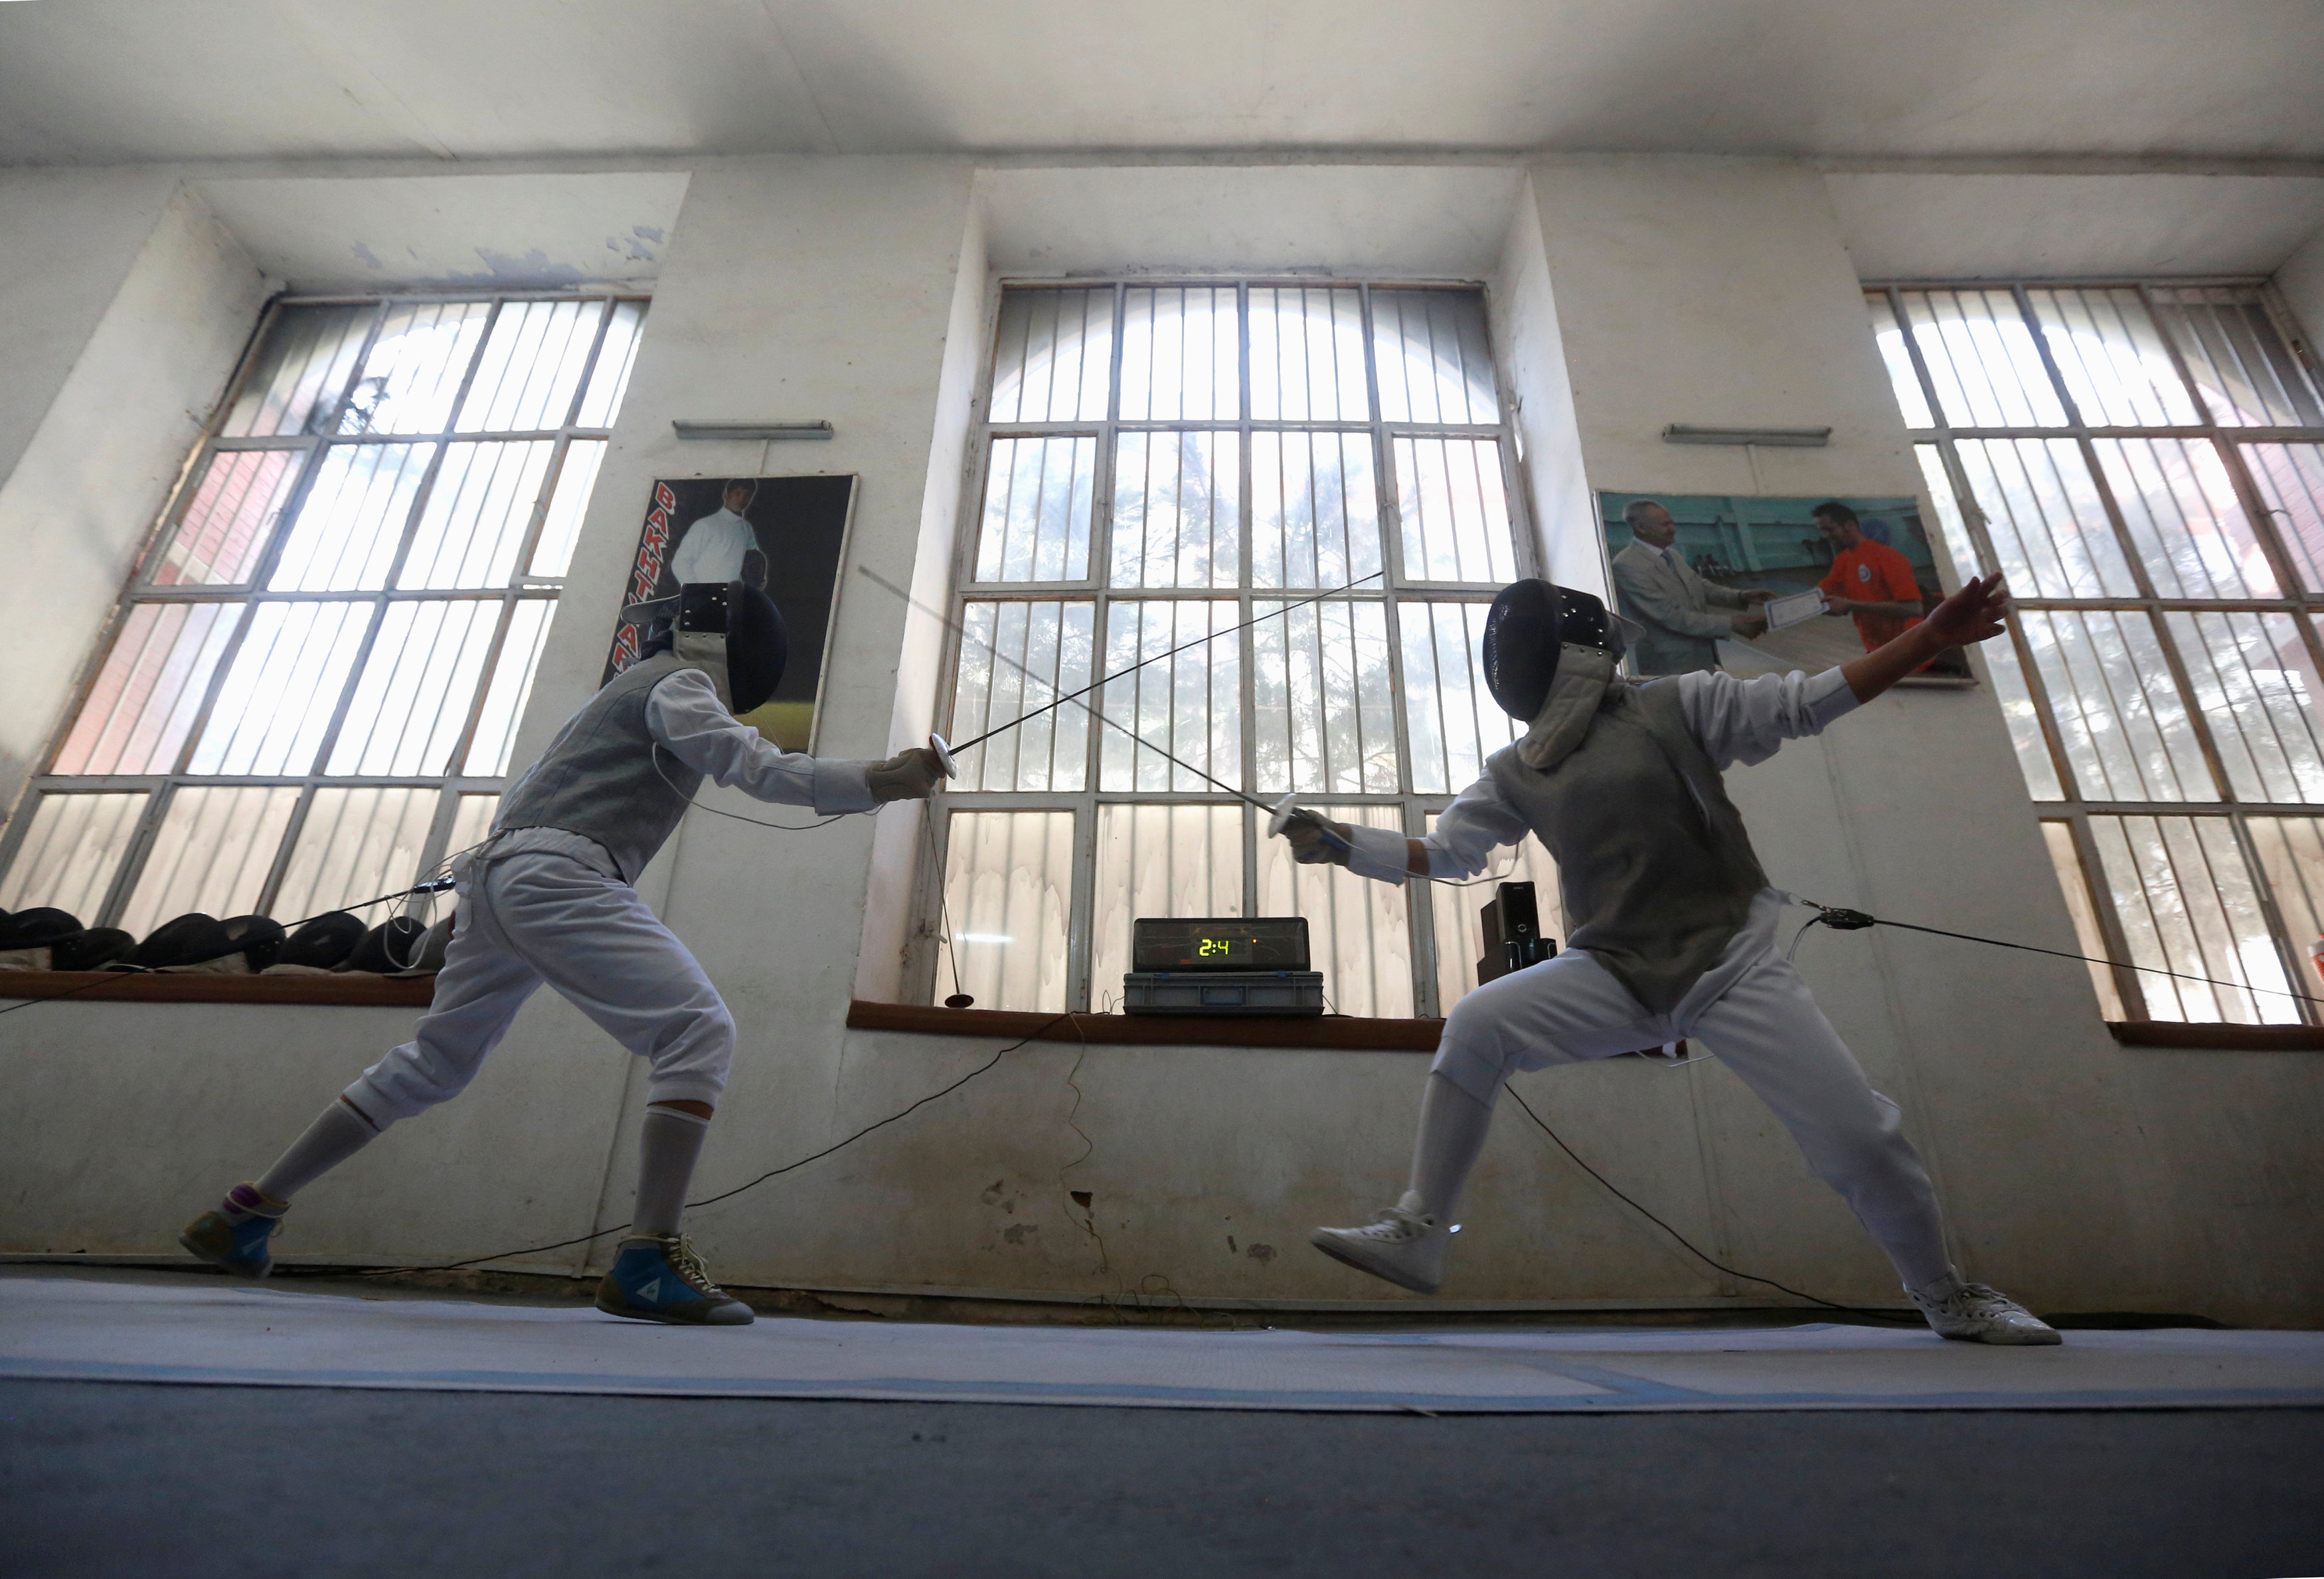 Afghan women fencers